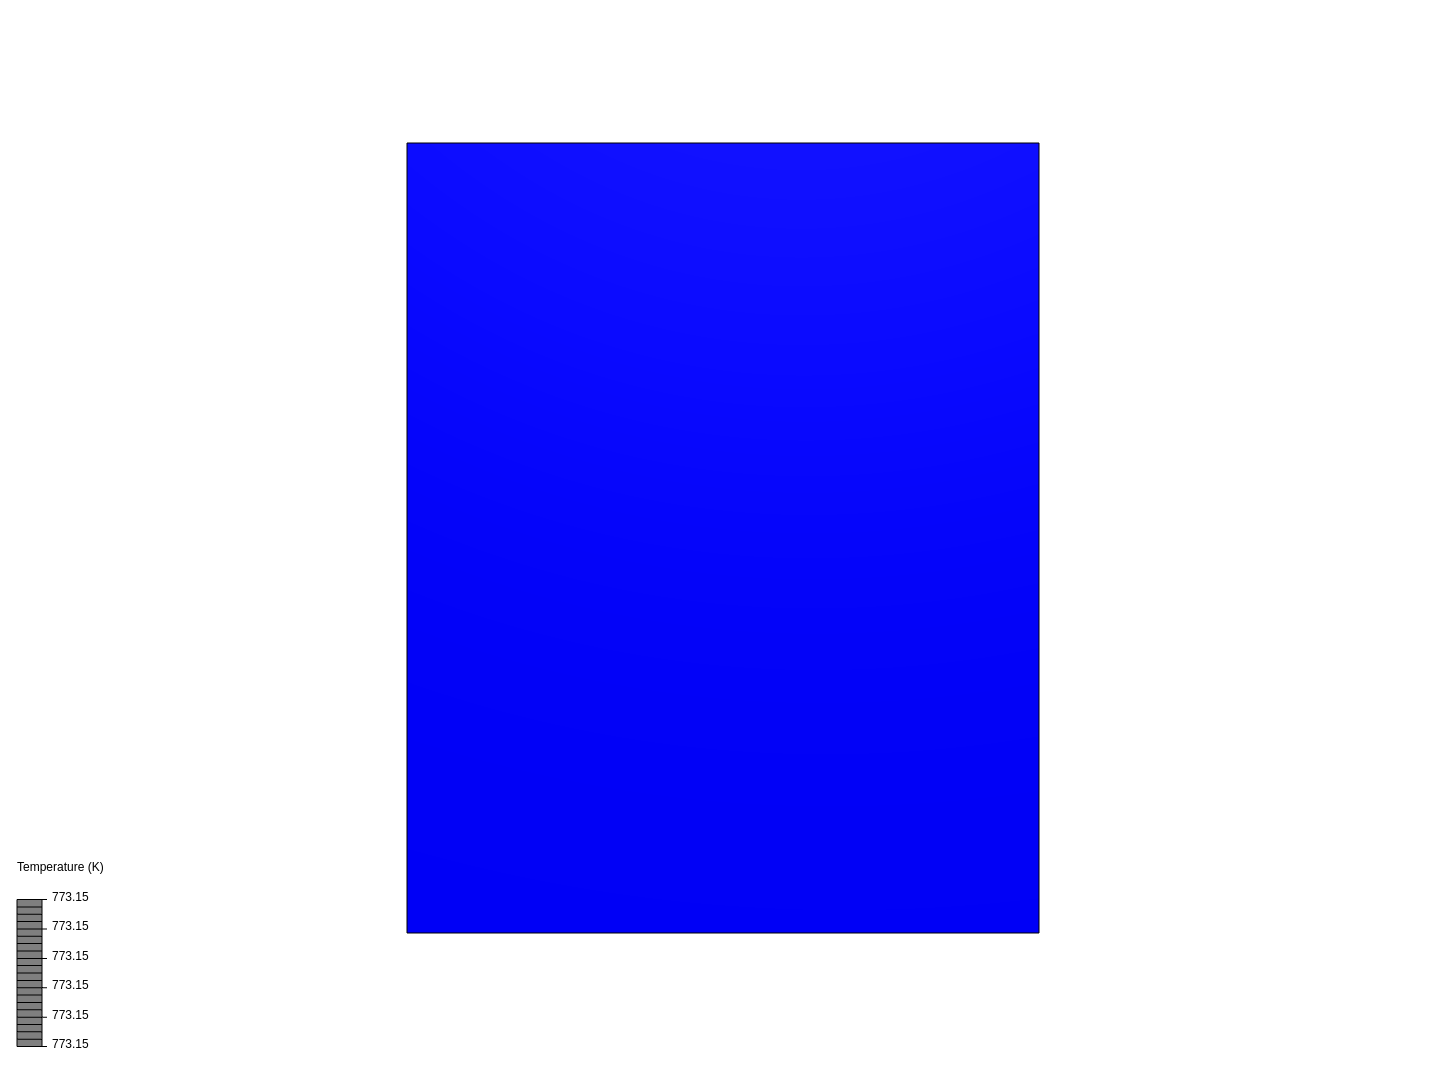 cube analysis image